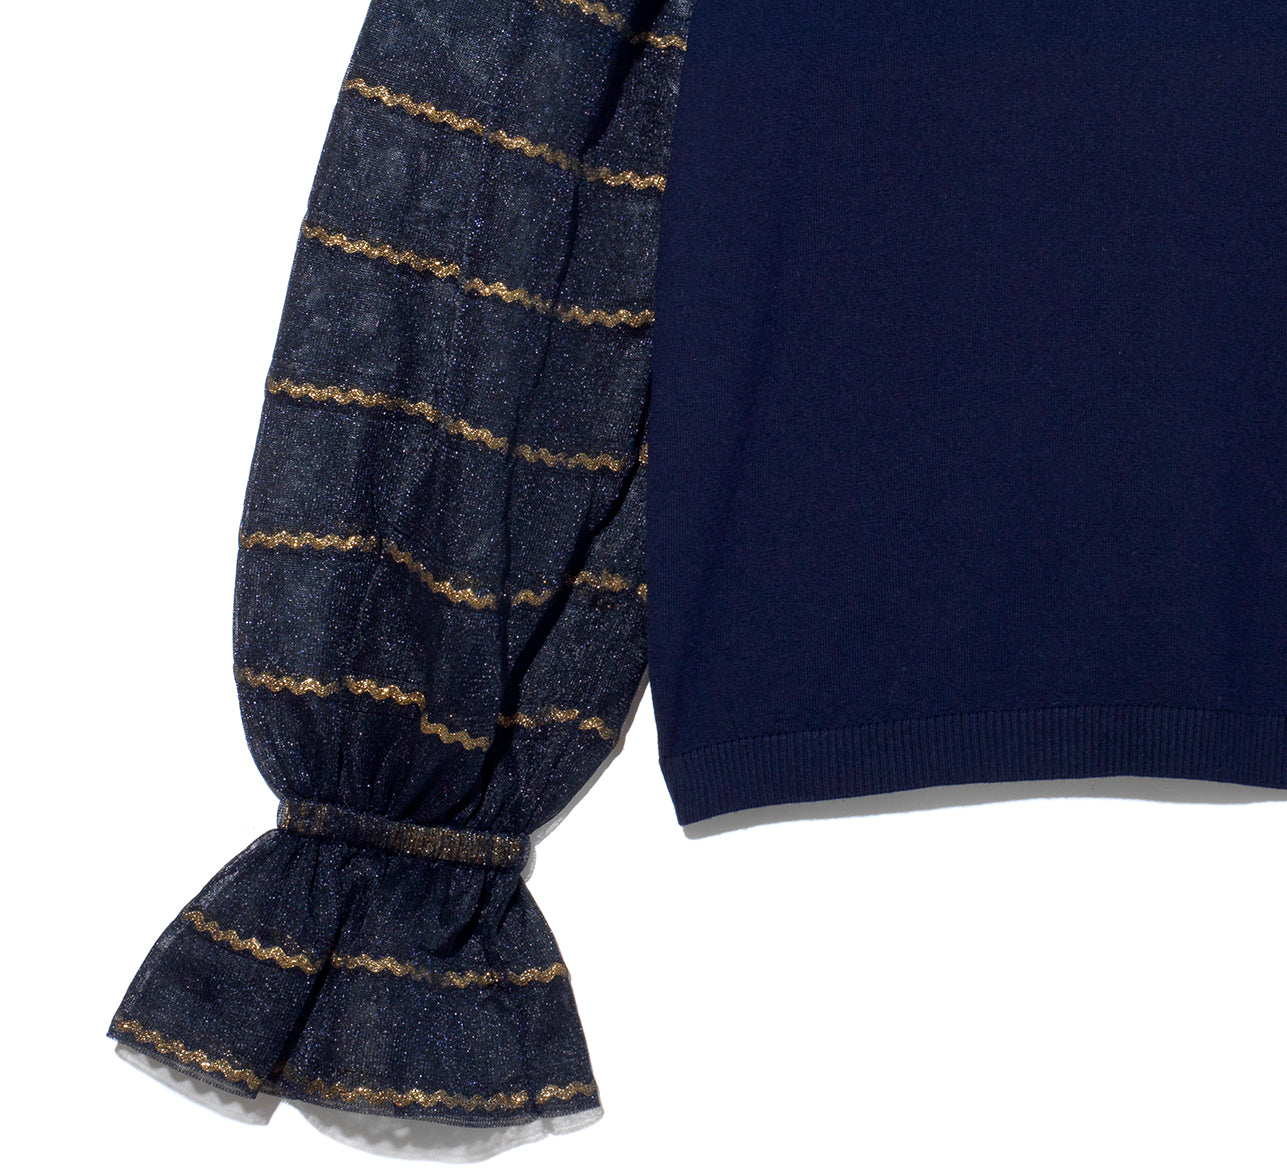 Carousel Sweater - Ric Rac Ribbon stripe - Navy